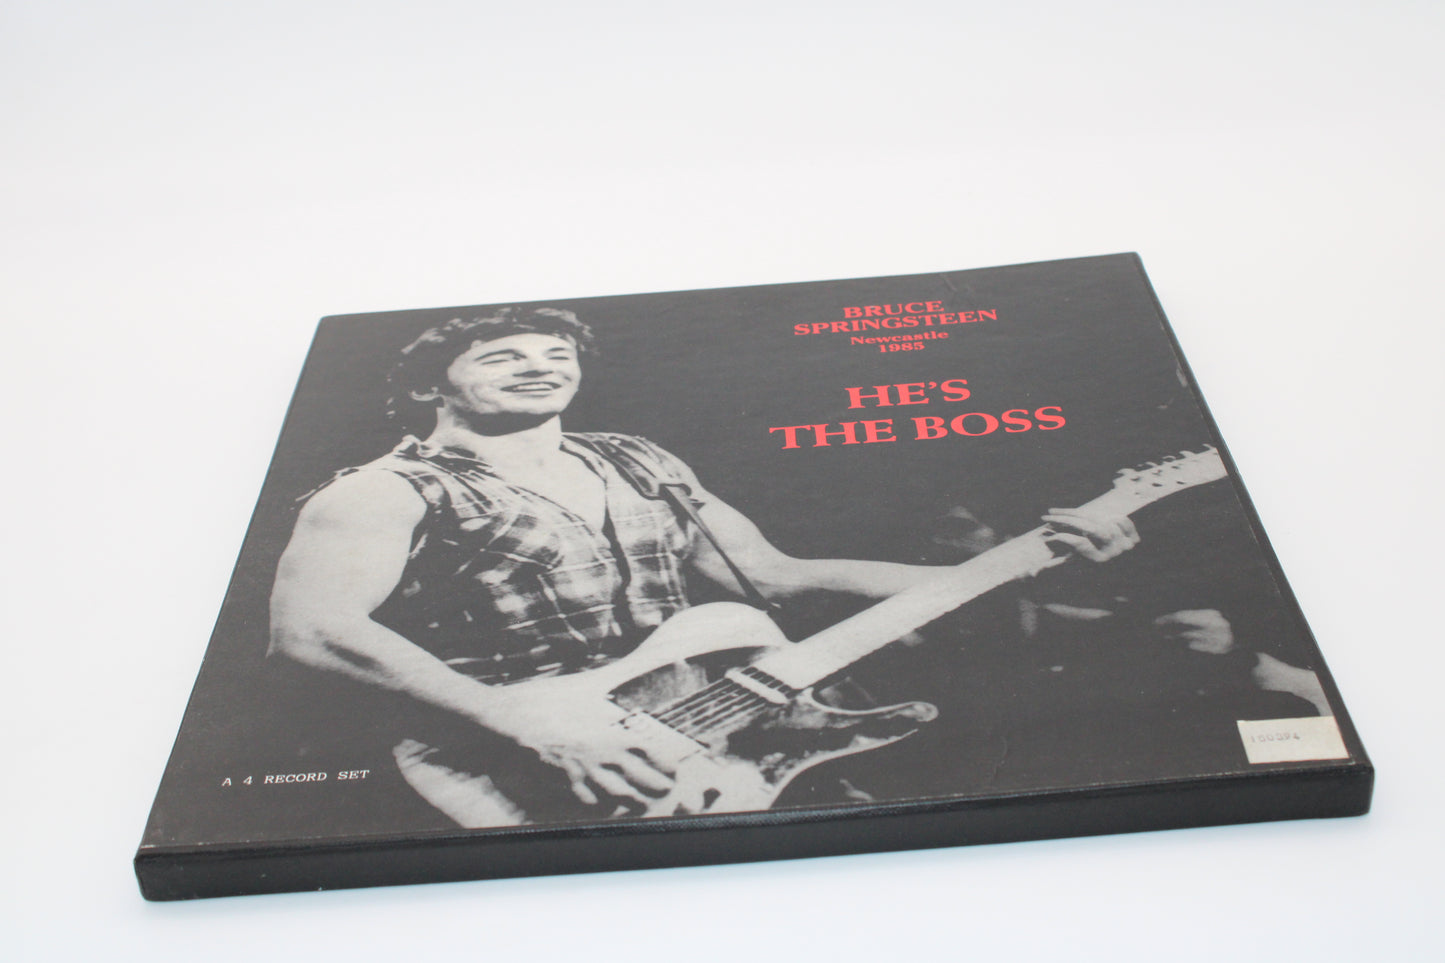 Bruce Springsteen & ESB - HE'S THE BOSS - 4 LP VINYL BOX SET - Near Mint, EX Sound Quality